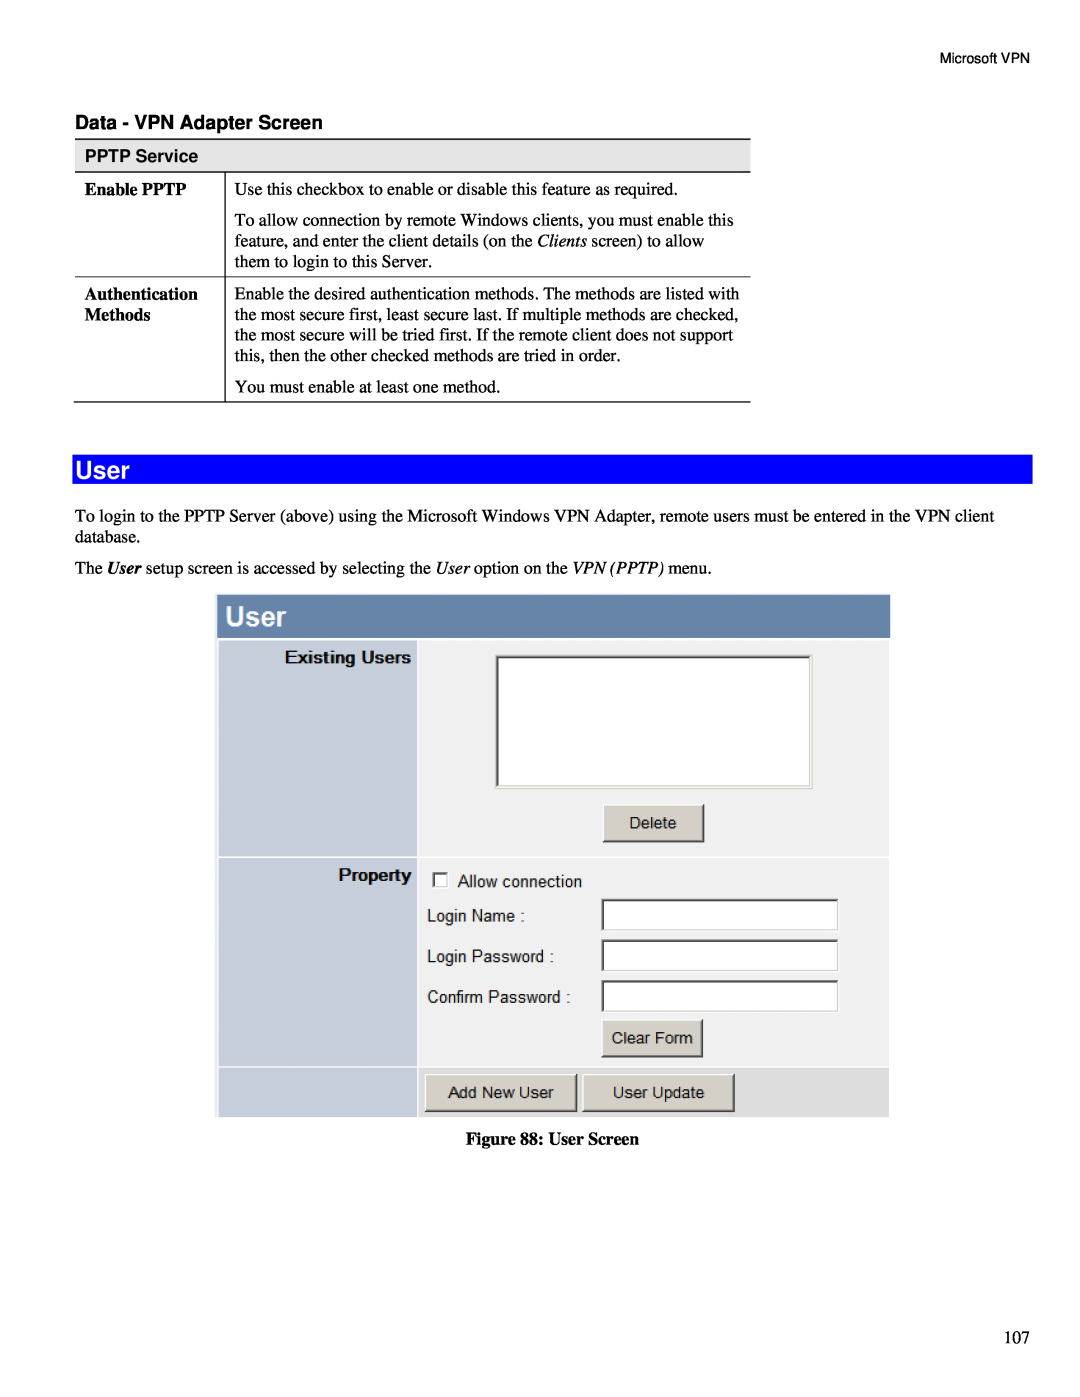 TRENDnet TW100-BRV324 manual User, Data - VPN Adapter Screen, PPTP Service 